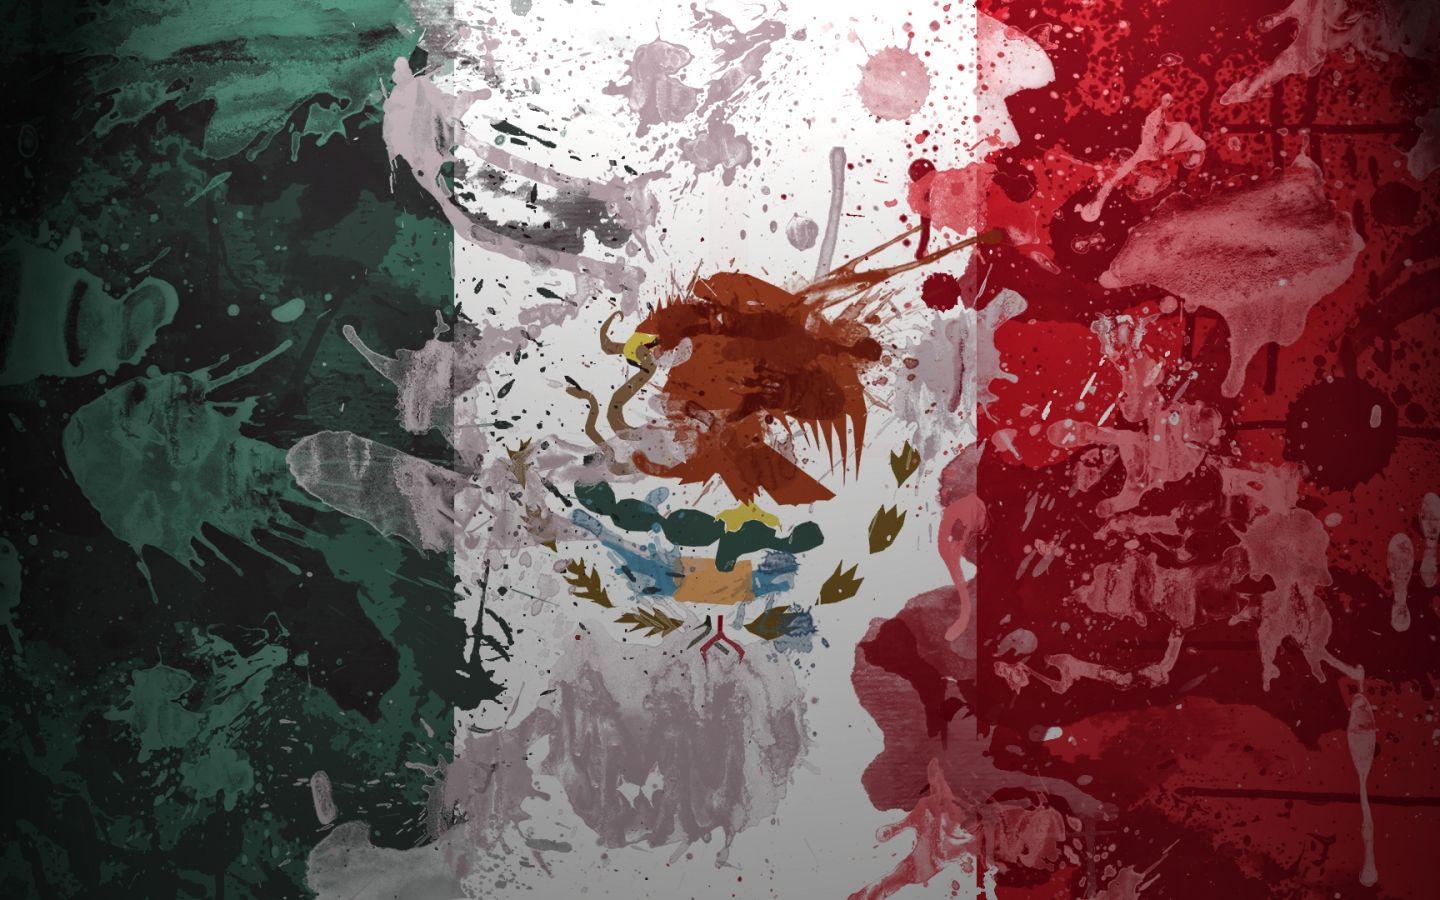 Mexican Desktop Wallpaper #mexican #desktop in 2019